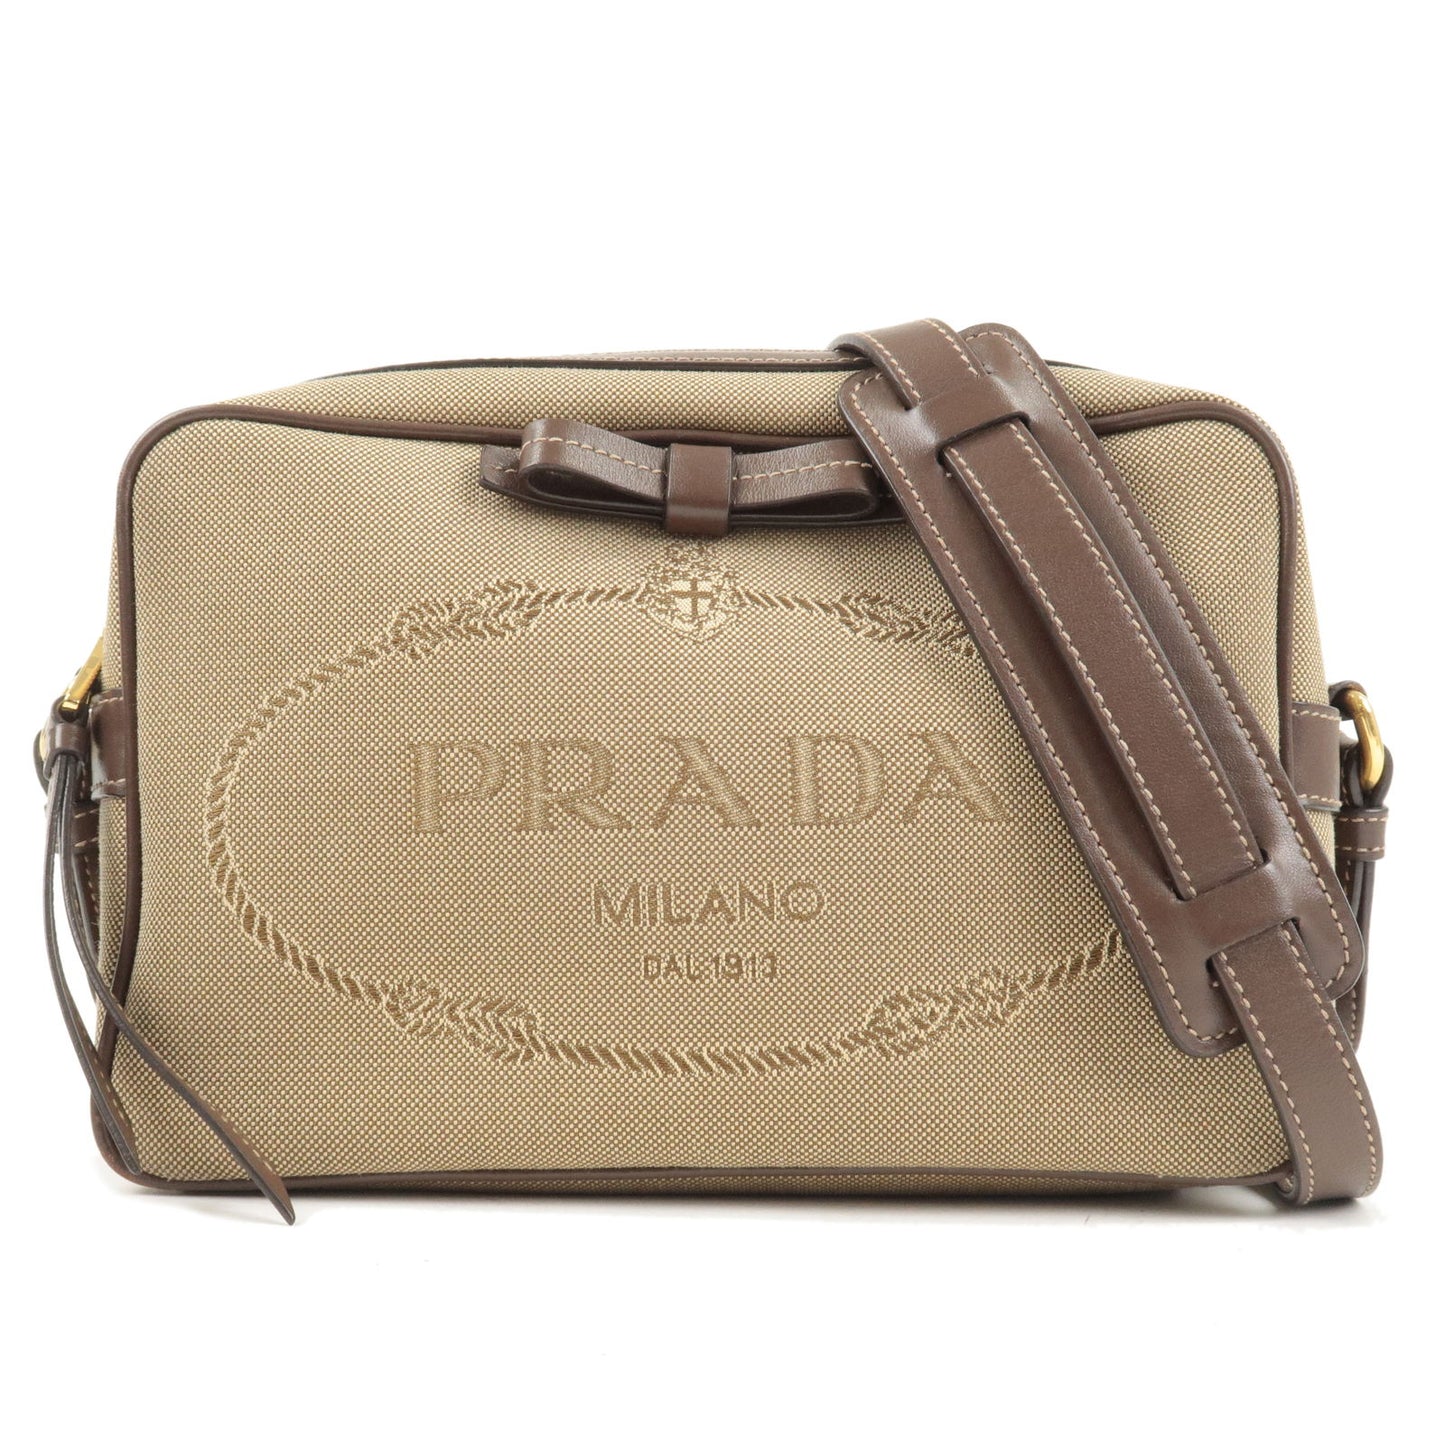 PRADA-Logo-Jacquard-Leather-Shoulder-Bag-Beige-Brown-1BH089